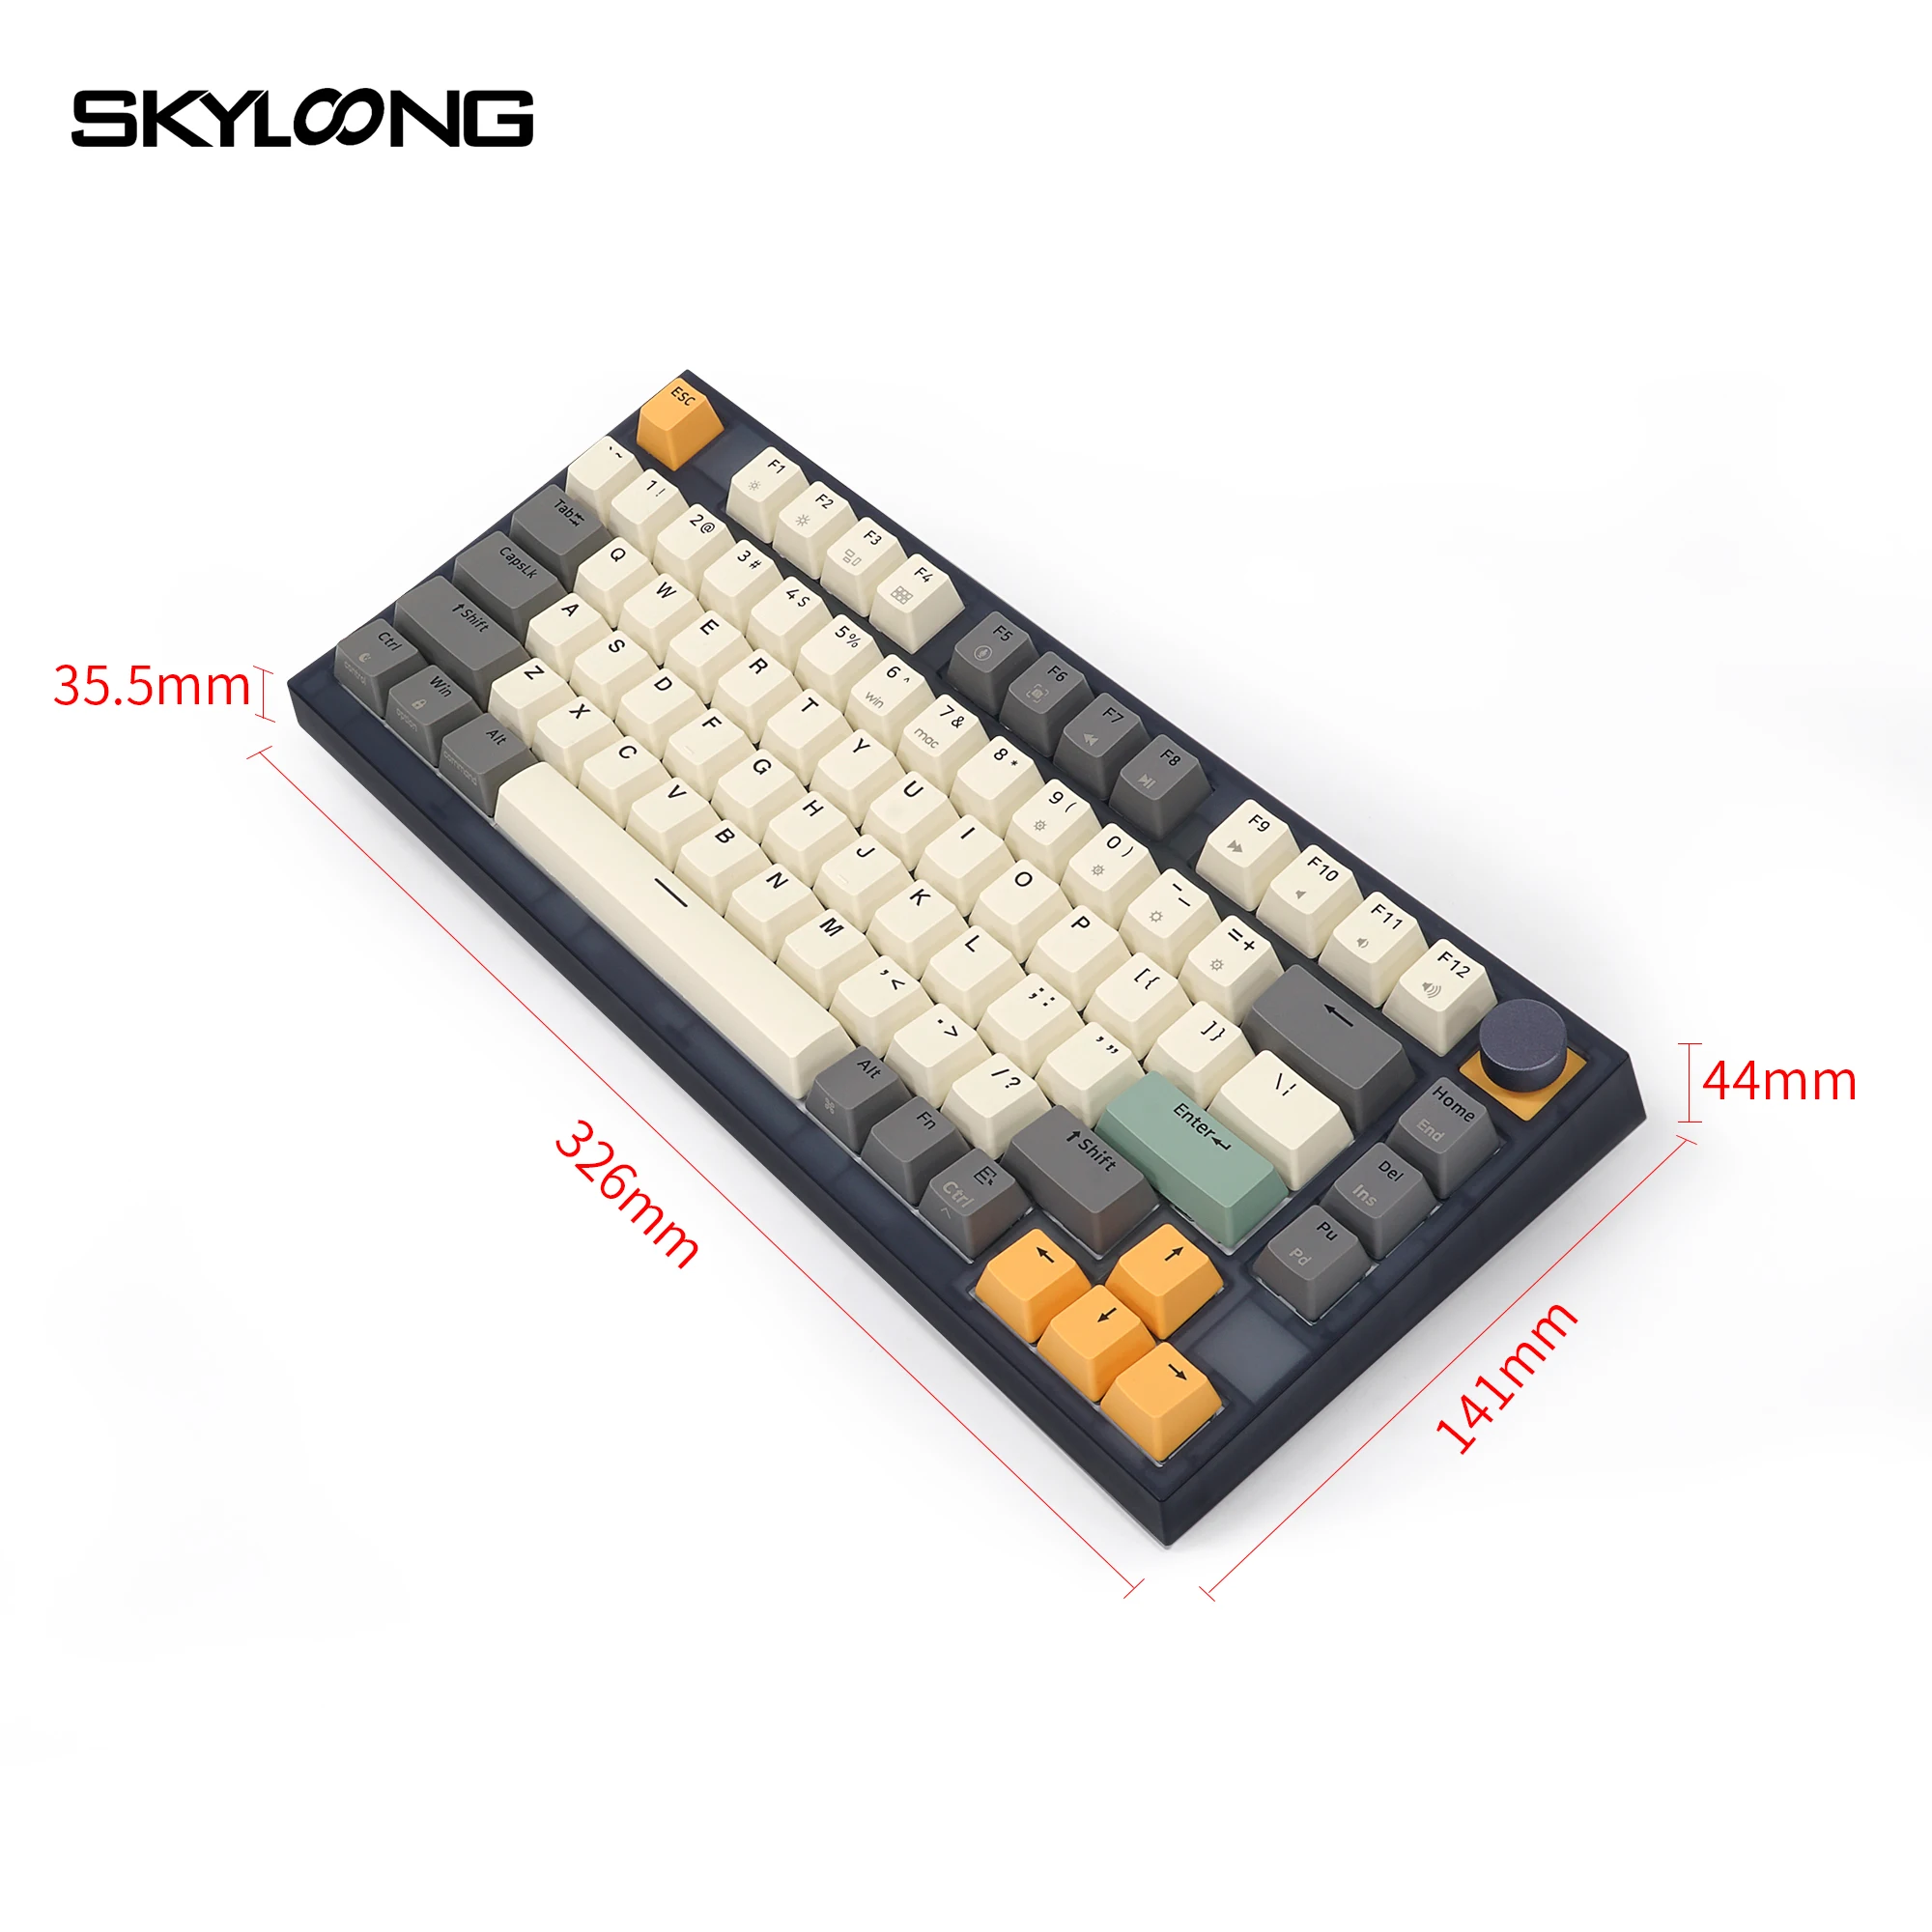 SKYLOONG Mechanical Keyboard GK75 Lite Gasket Bluetooth 2.4G USB Nordic Triple Mode Rotary Knob Gamers Gaming Wireless Keyboards